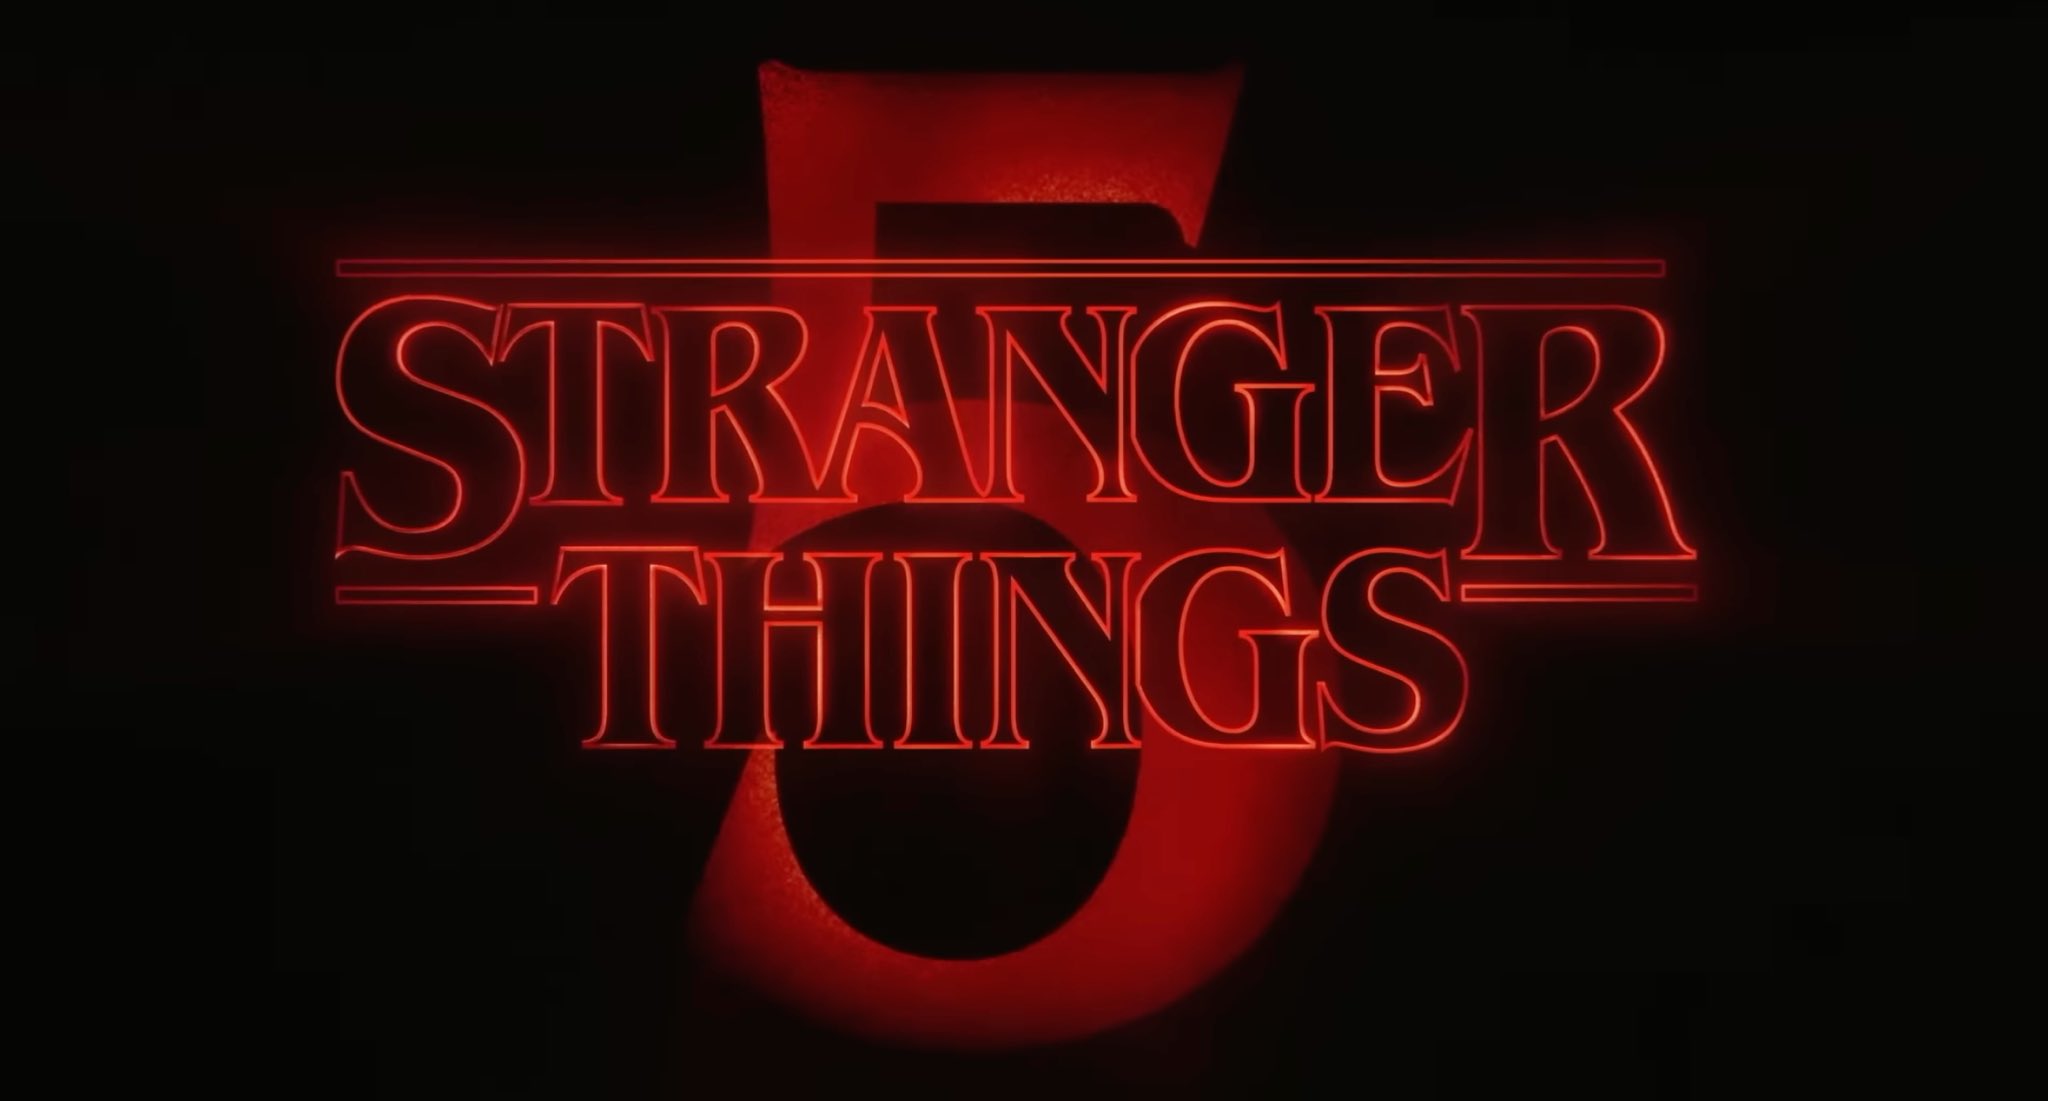 Exclusivo] Will Byers de Stranger Things diz para fugirem de spoilers